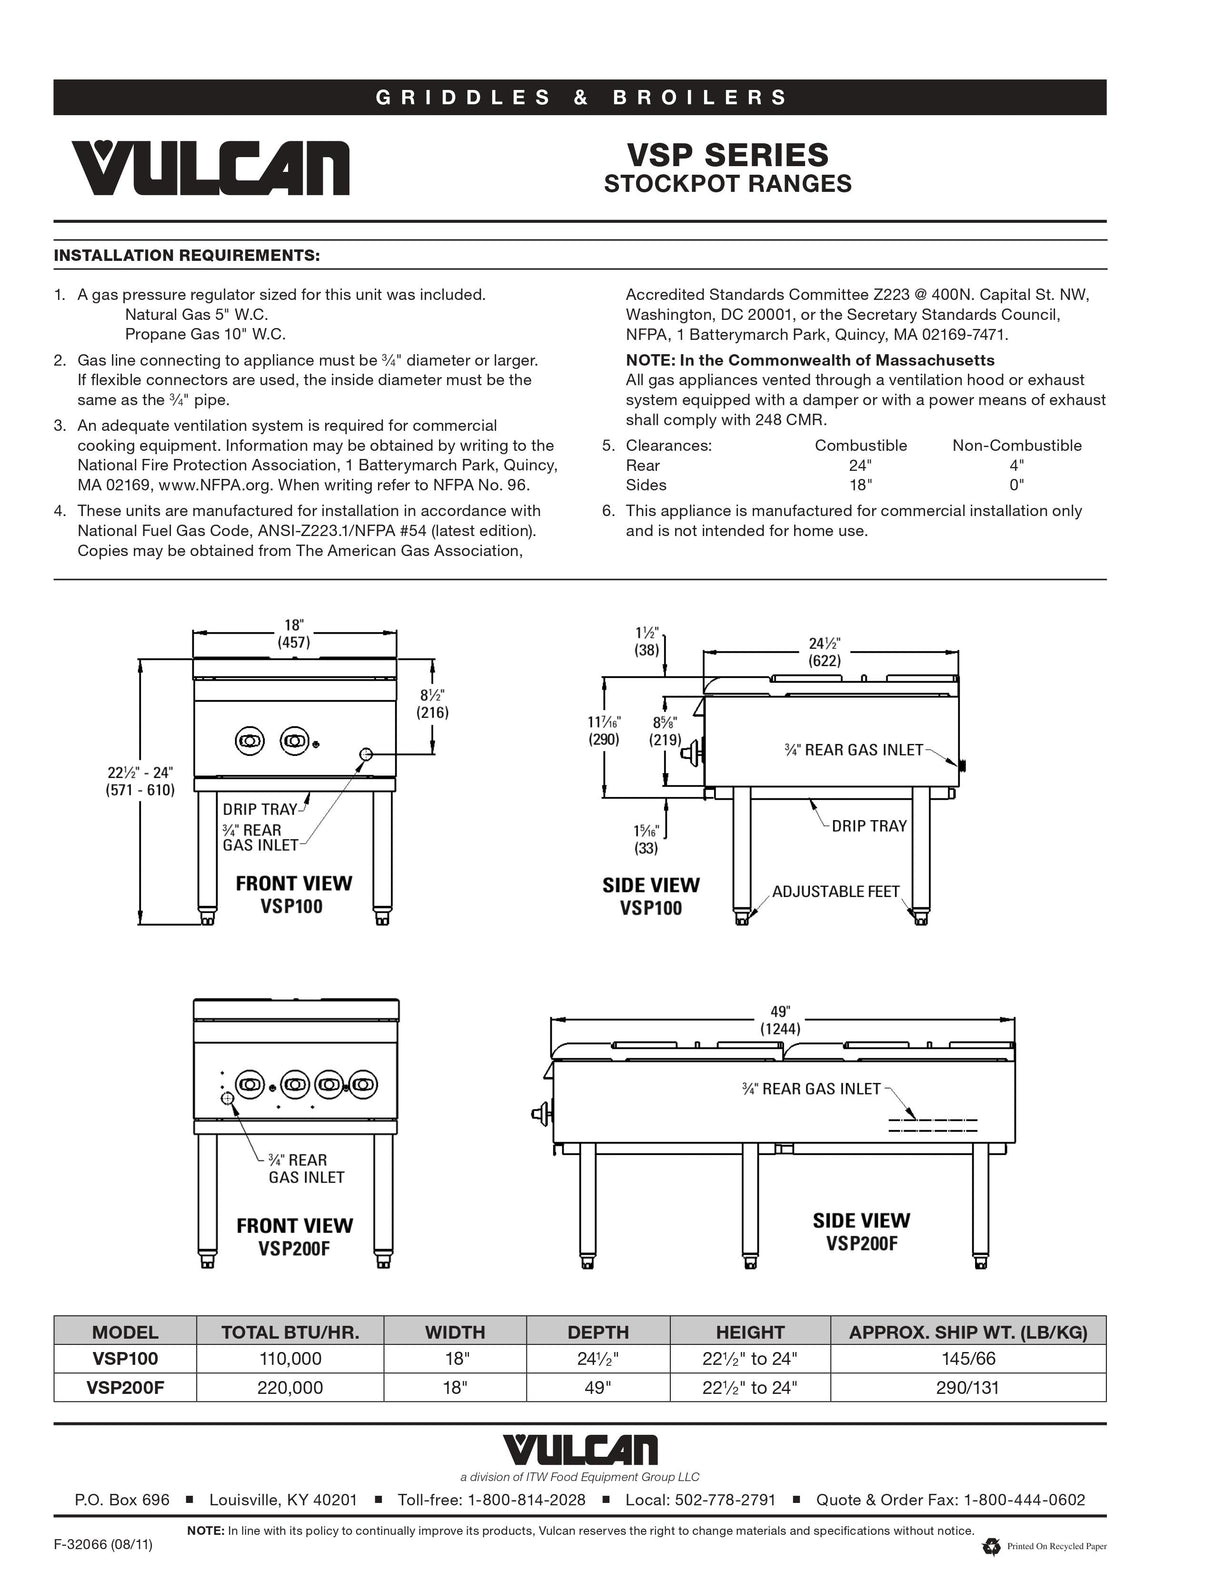 Vulcan Stock Pot Range - VSP100